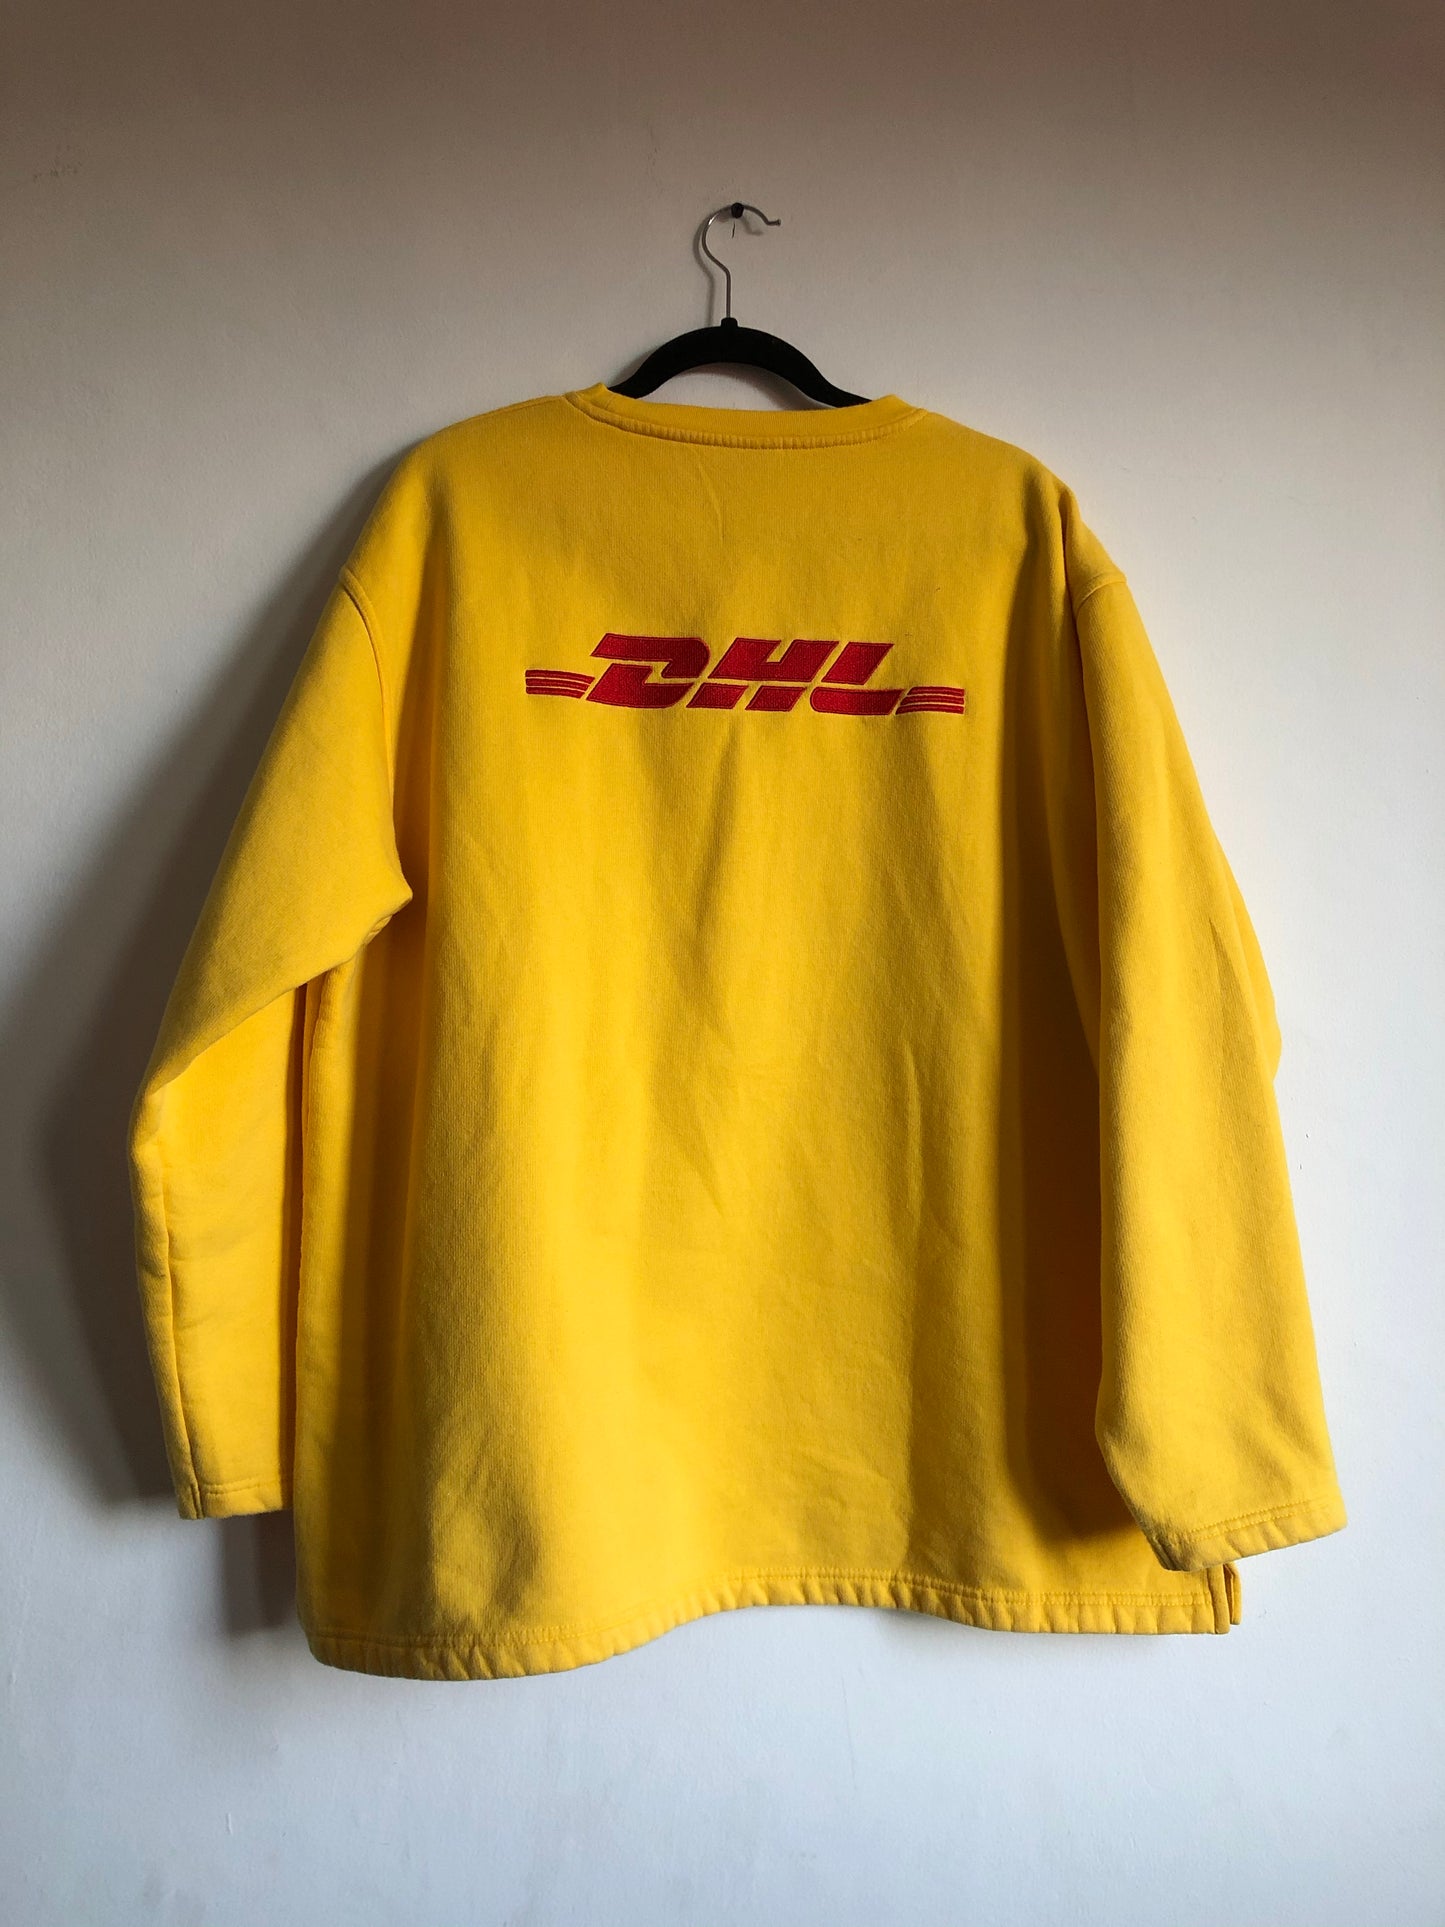 DHL sweatshirt